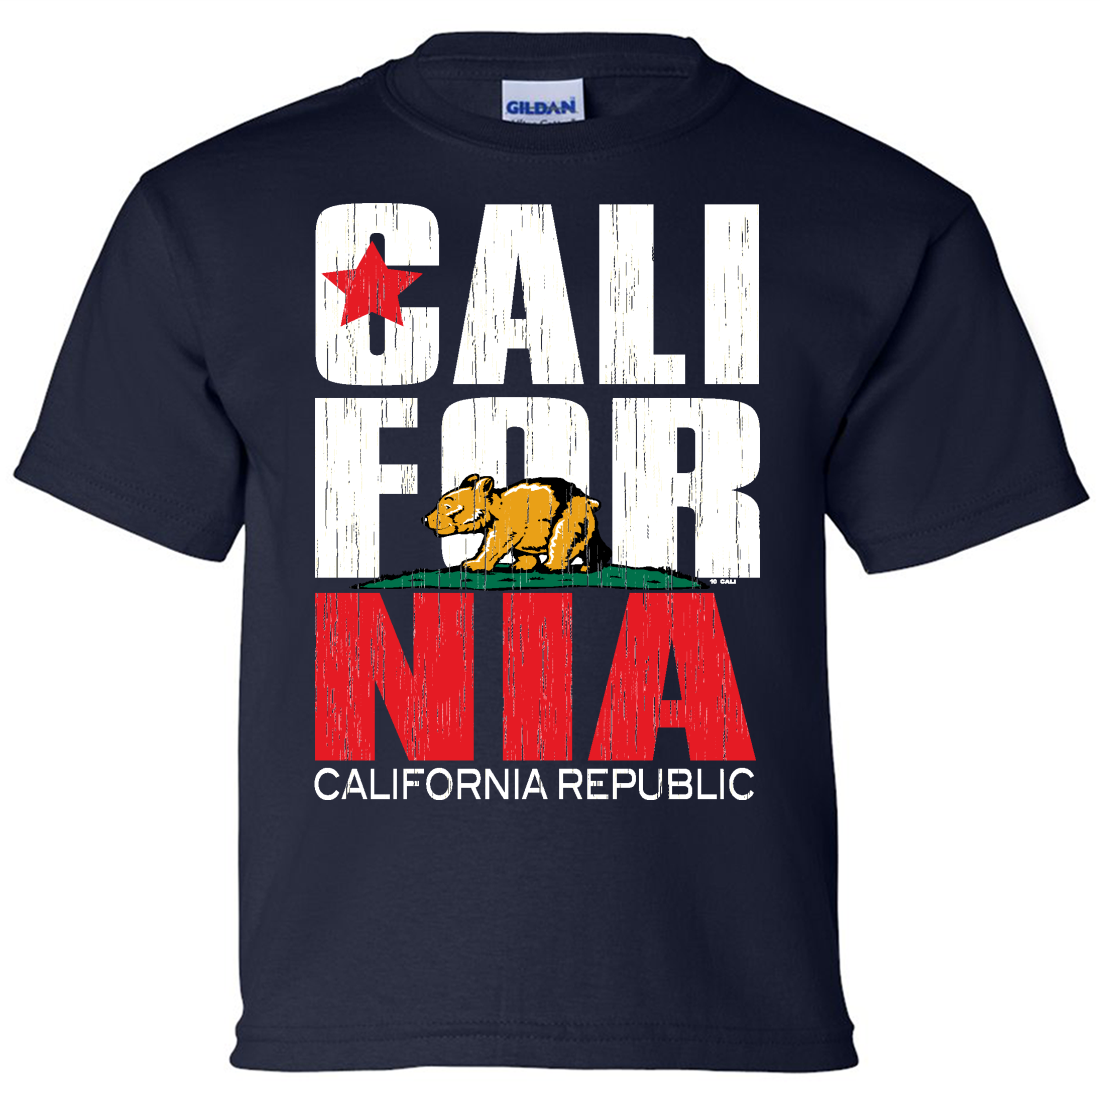 new california t shirt